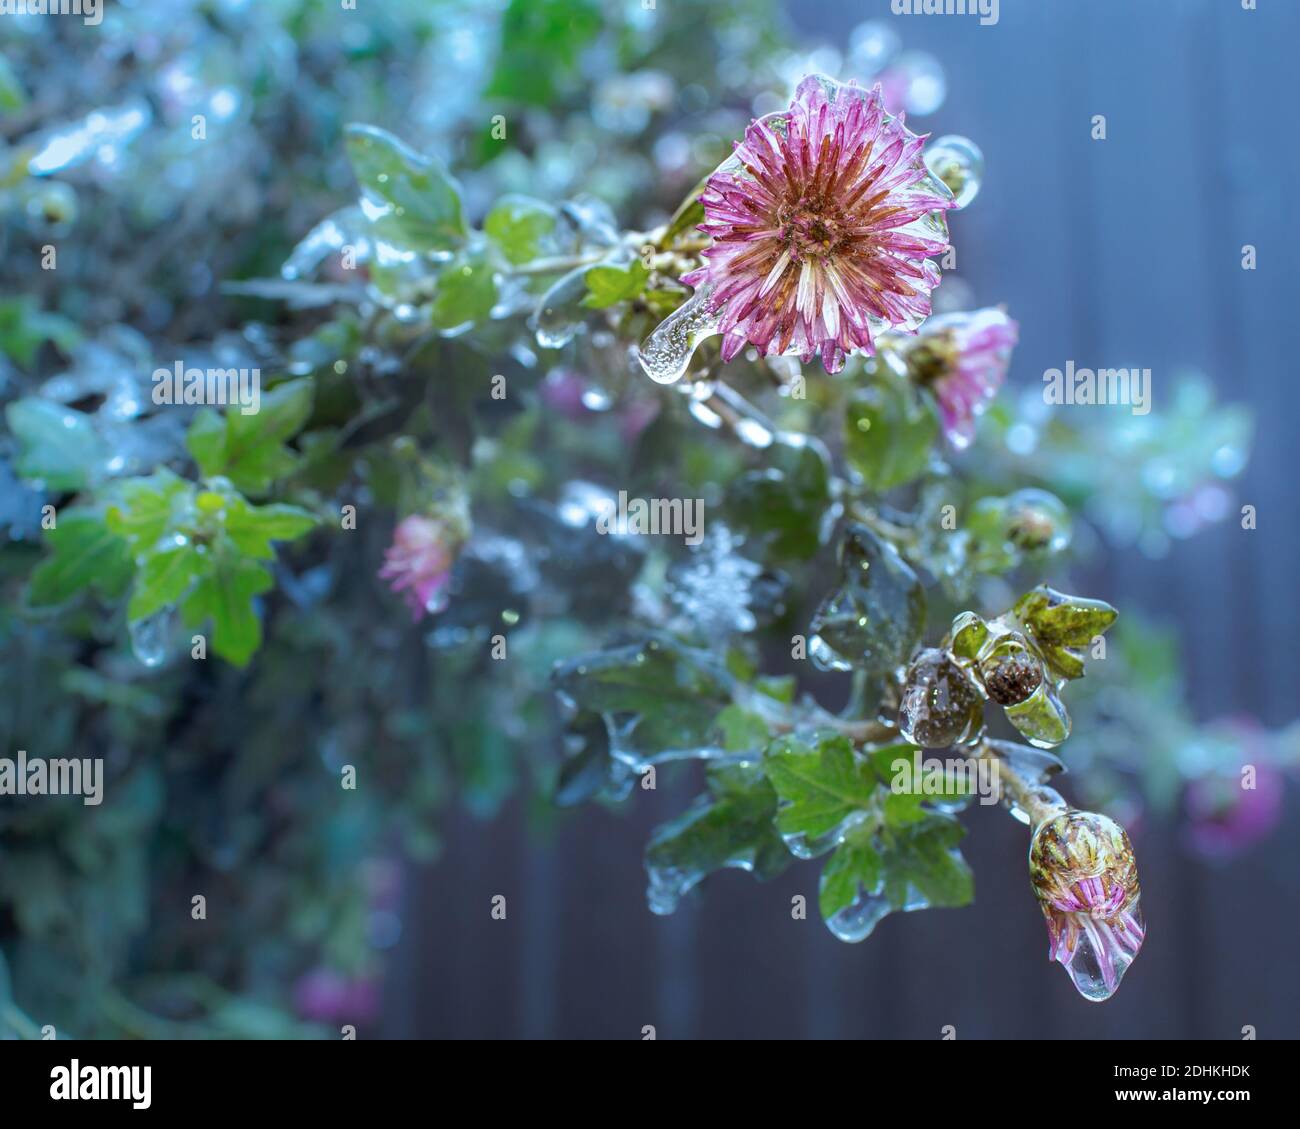 Frozen flowers produced by freezing rain outside. Soft focus technique Stock Photo